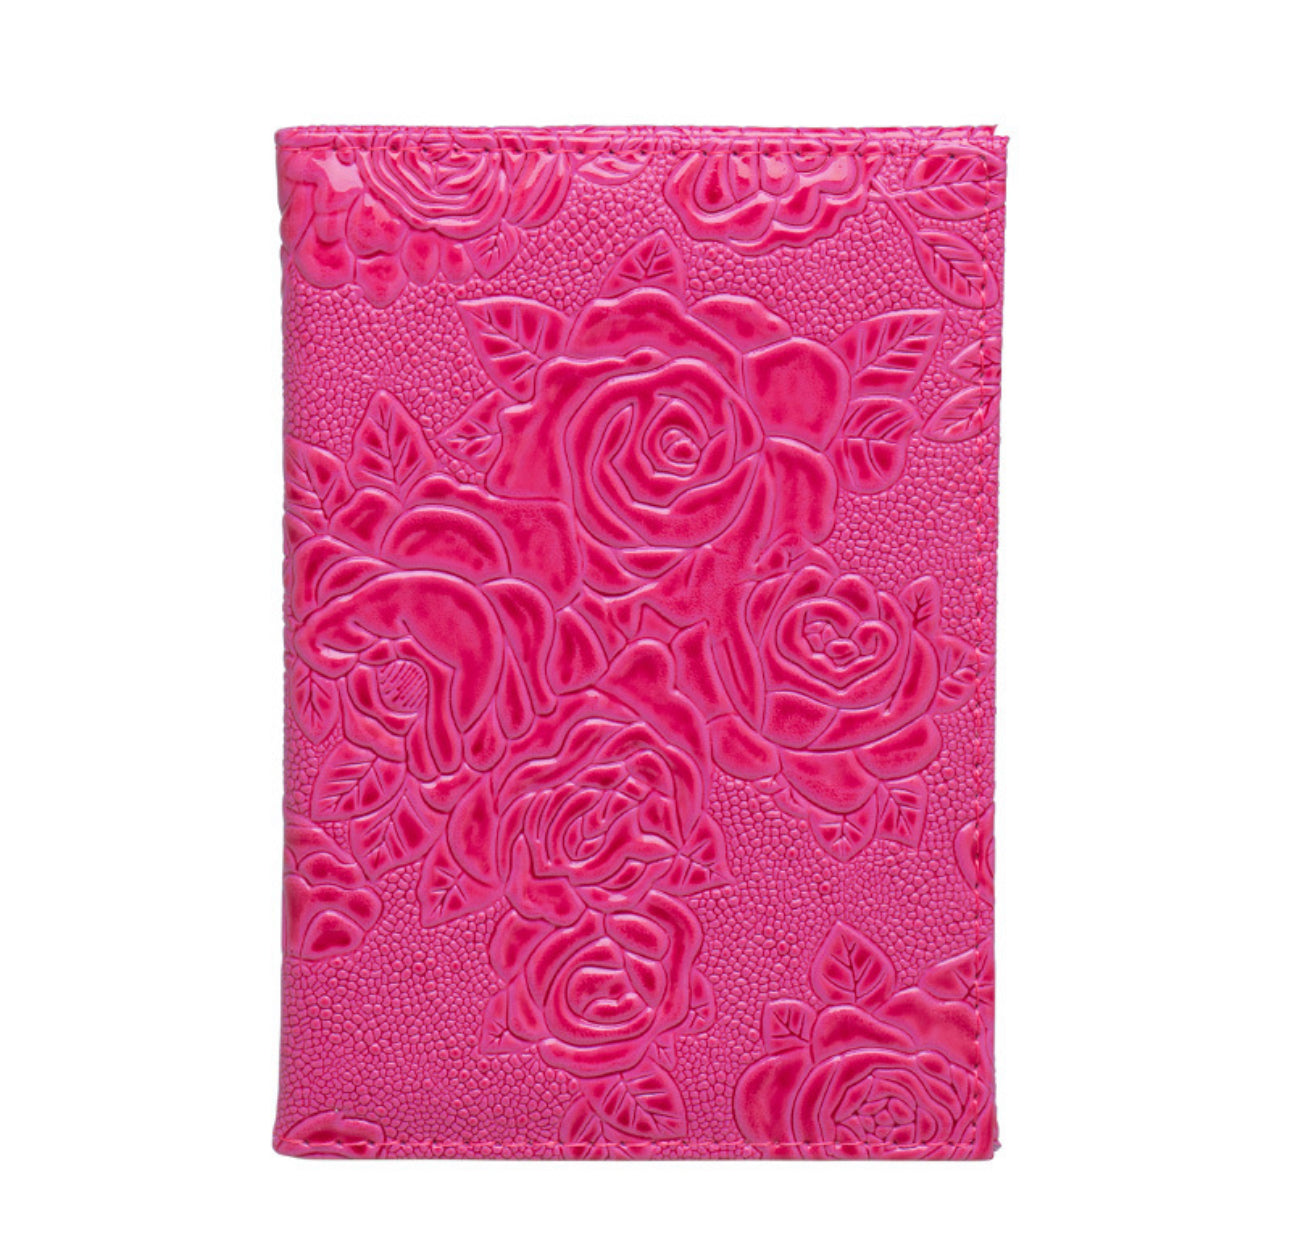 Embossed Rose Passport Cover